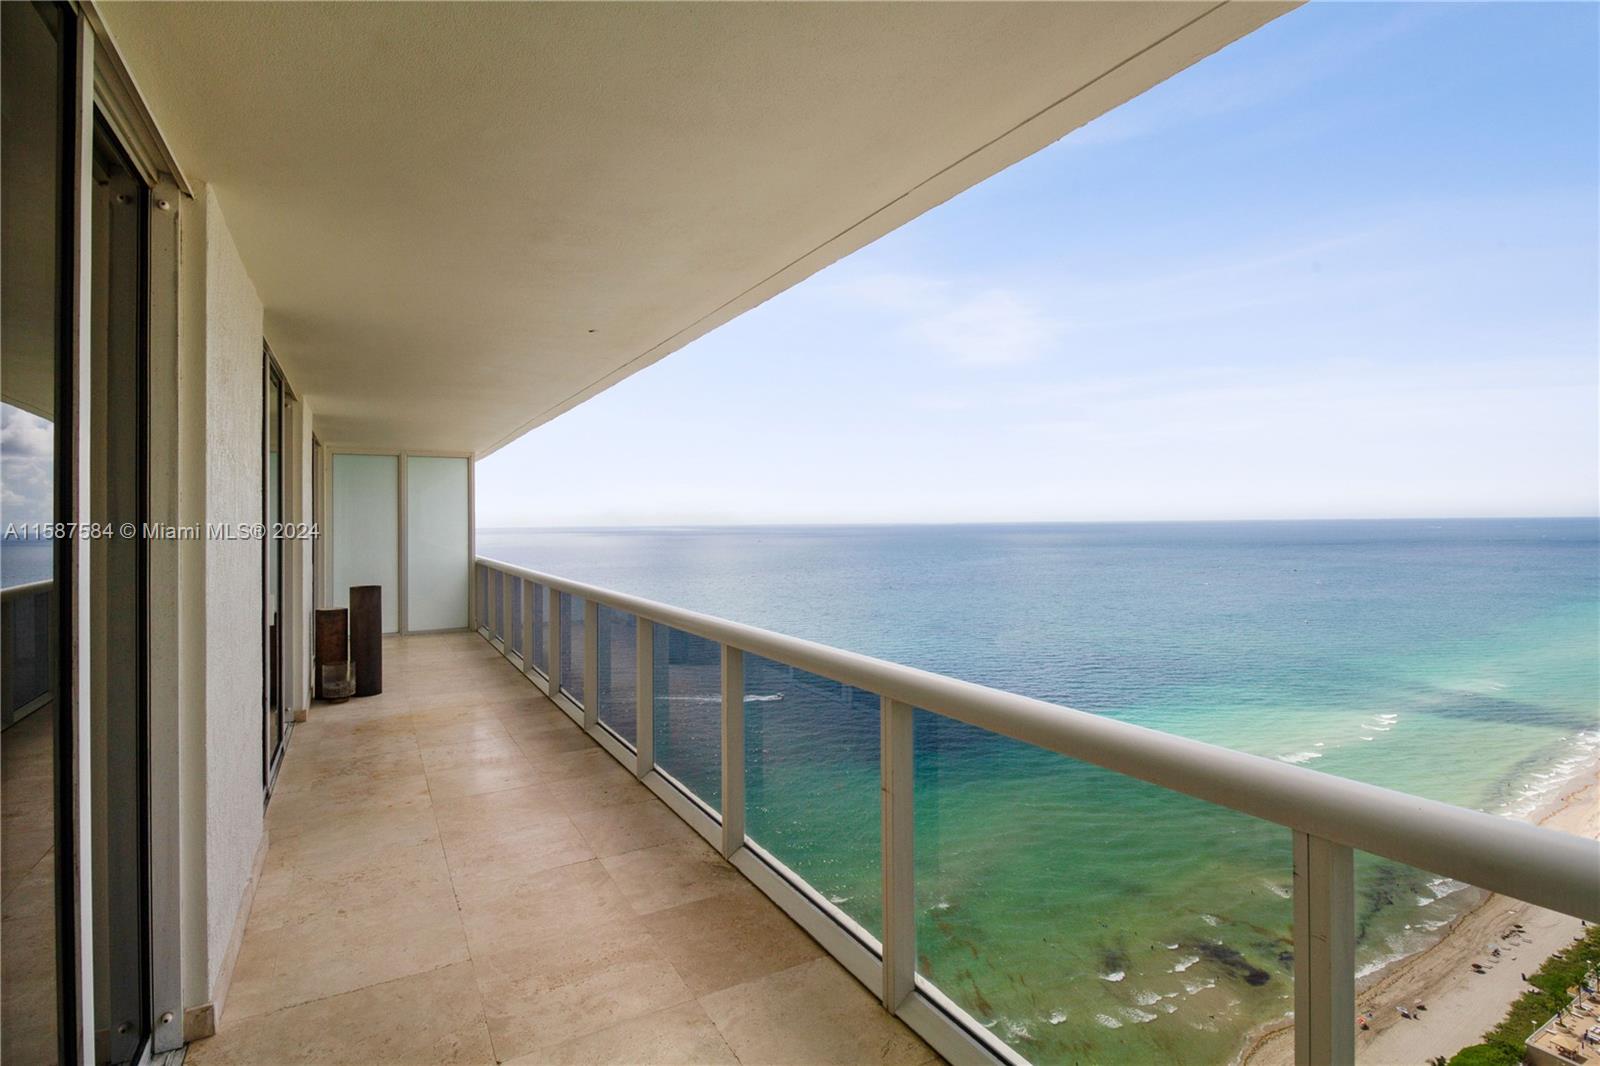 Rental Property at 1830 S Ocean Dr 4204, Hallandale Beach, Broward County, Florida - Bedrooms: 3 
Bathrooms: 3  - $9,000 MO.